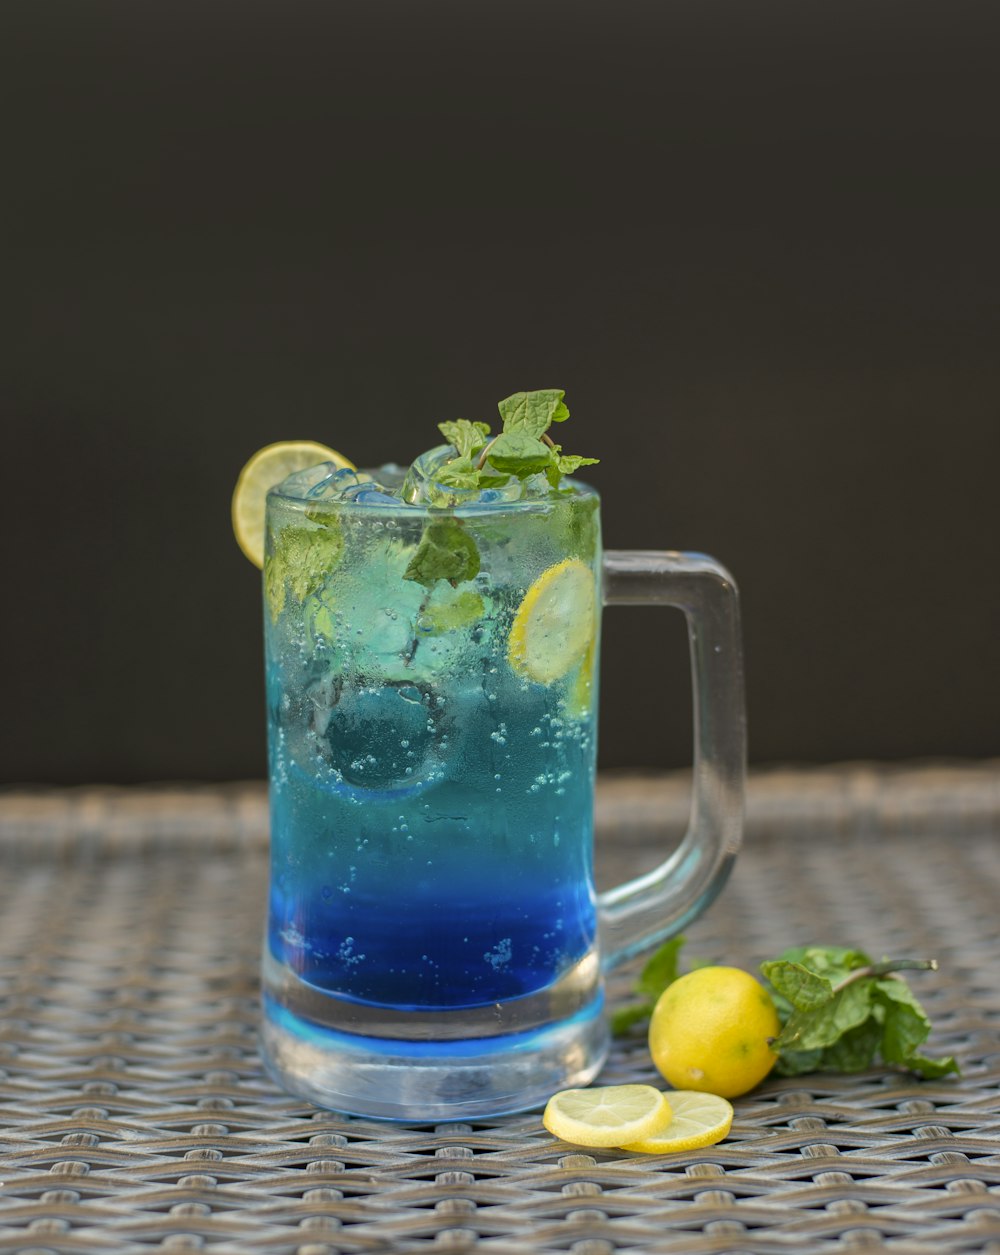 clear glass mug with blue liquid